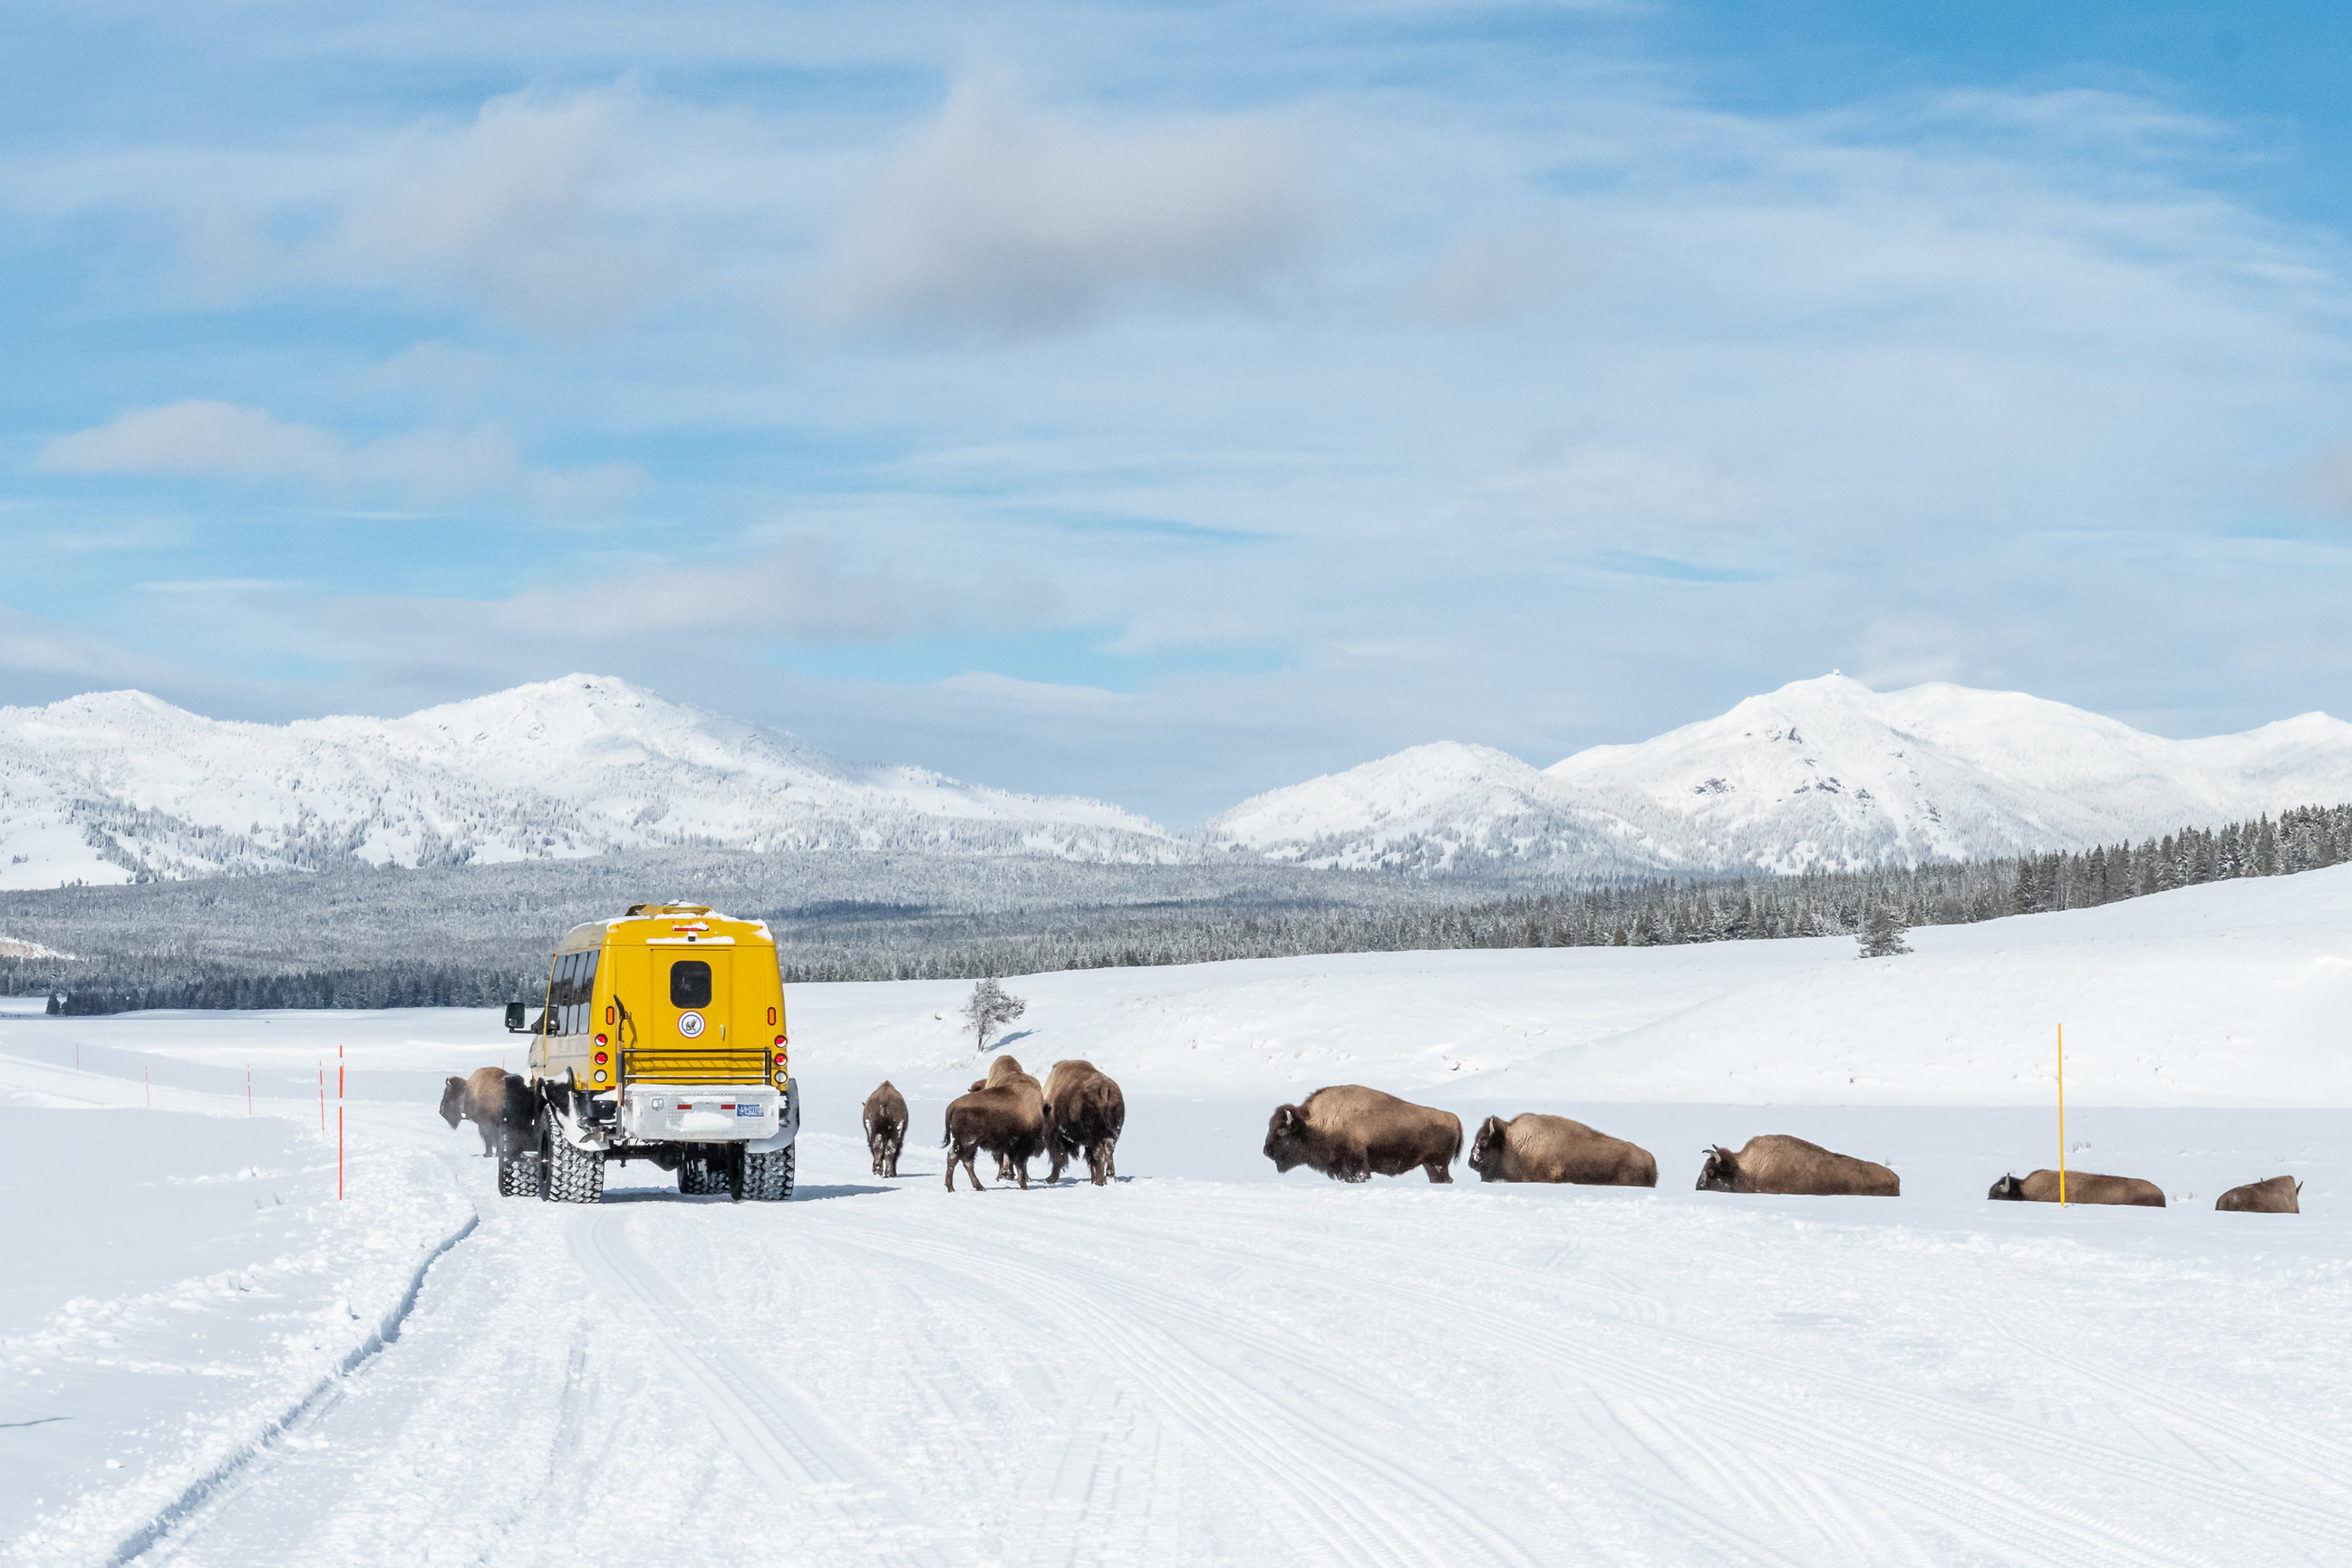 Yellowstone Winter Photography Workshop 2022